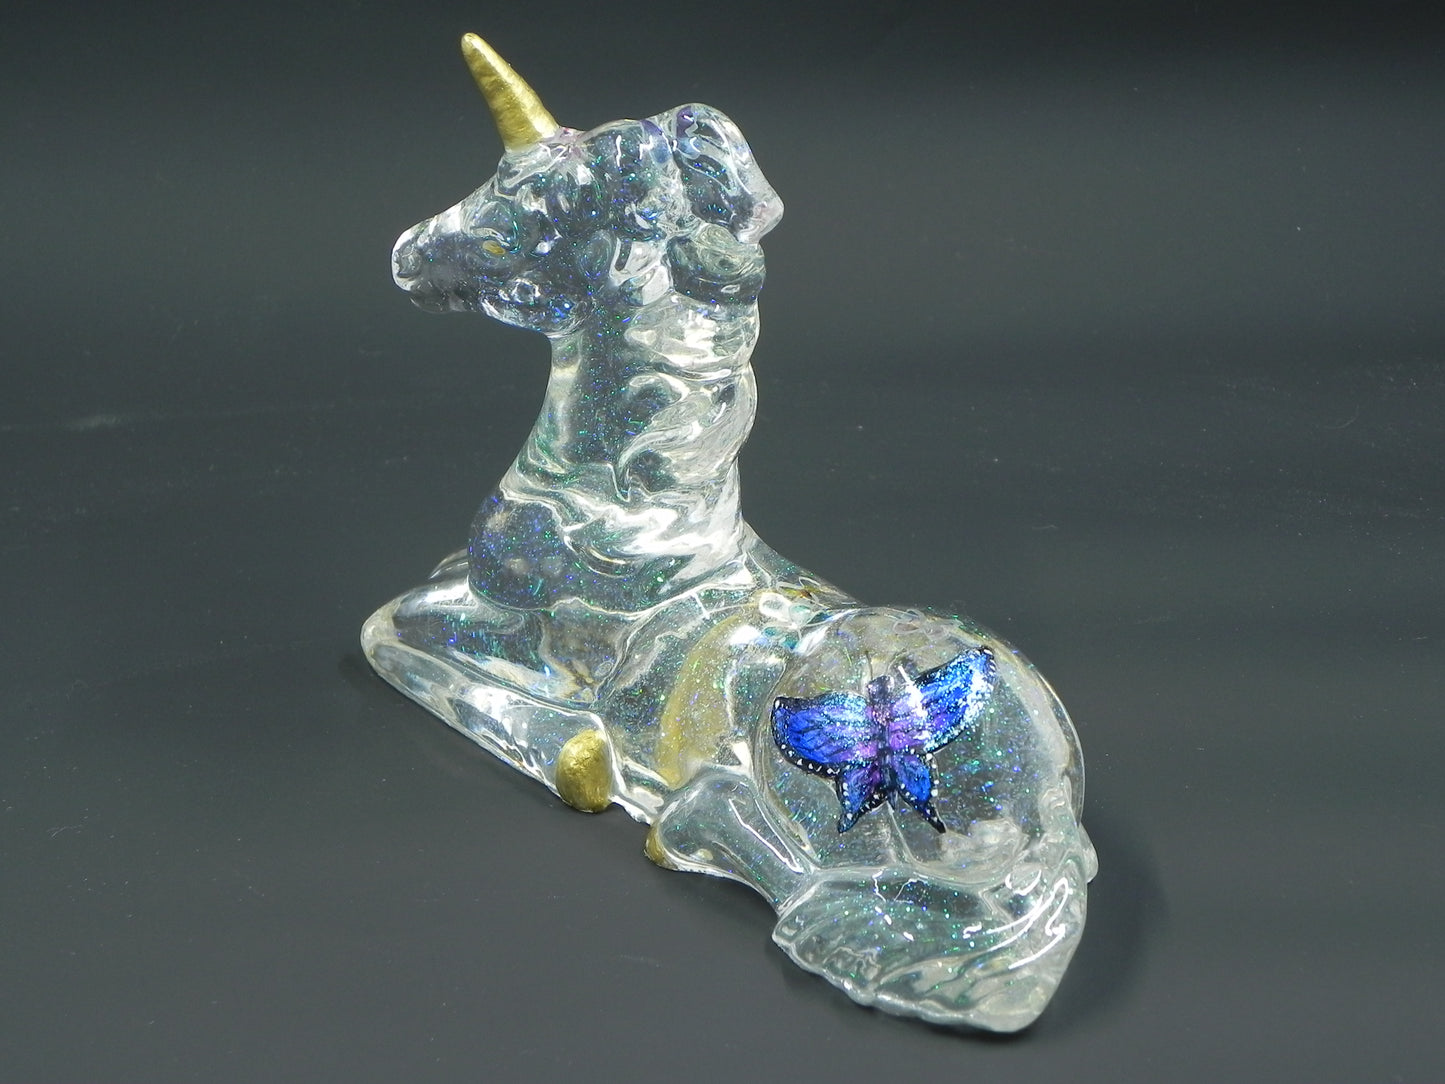 Unicorn Figure